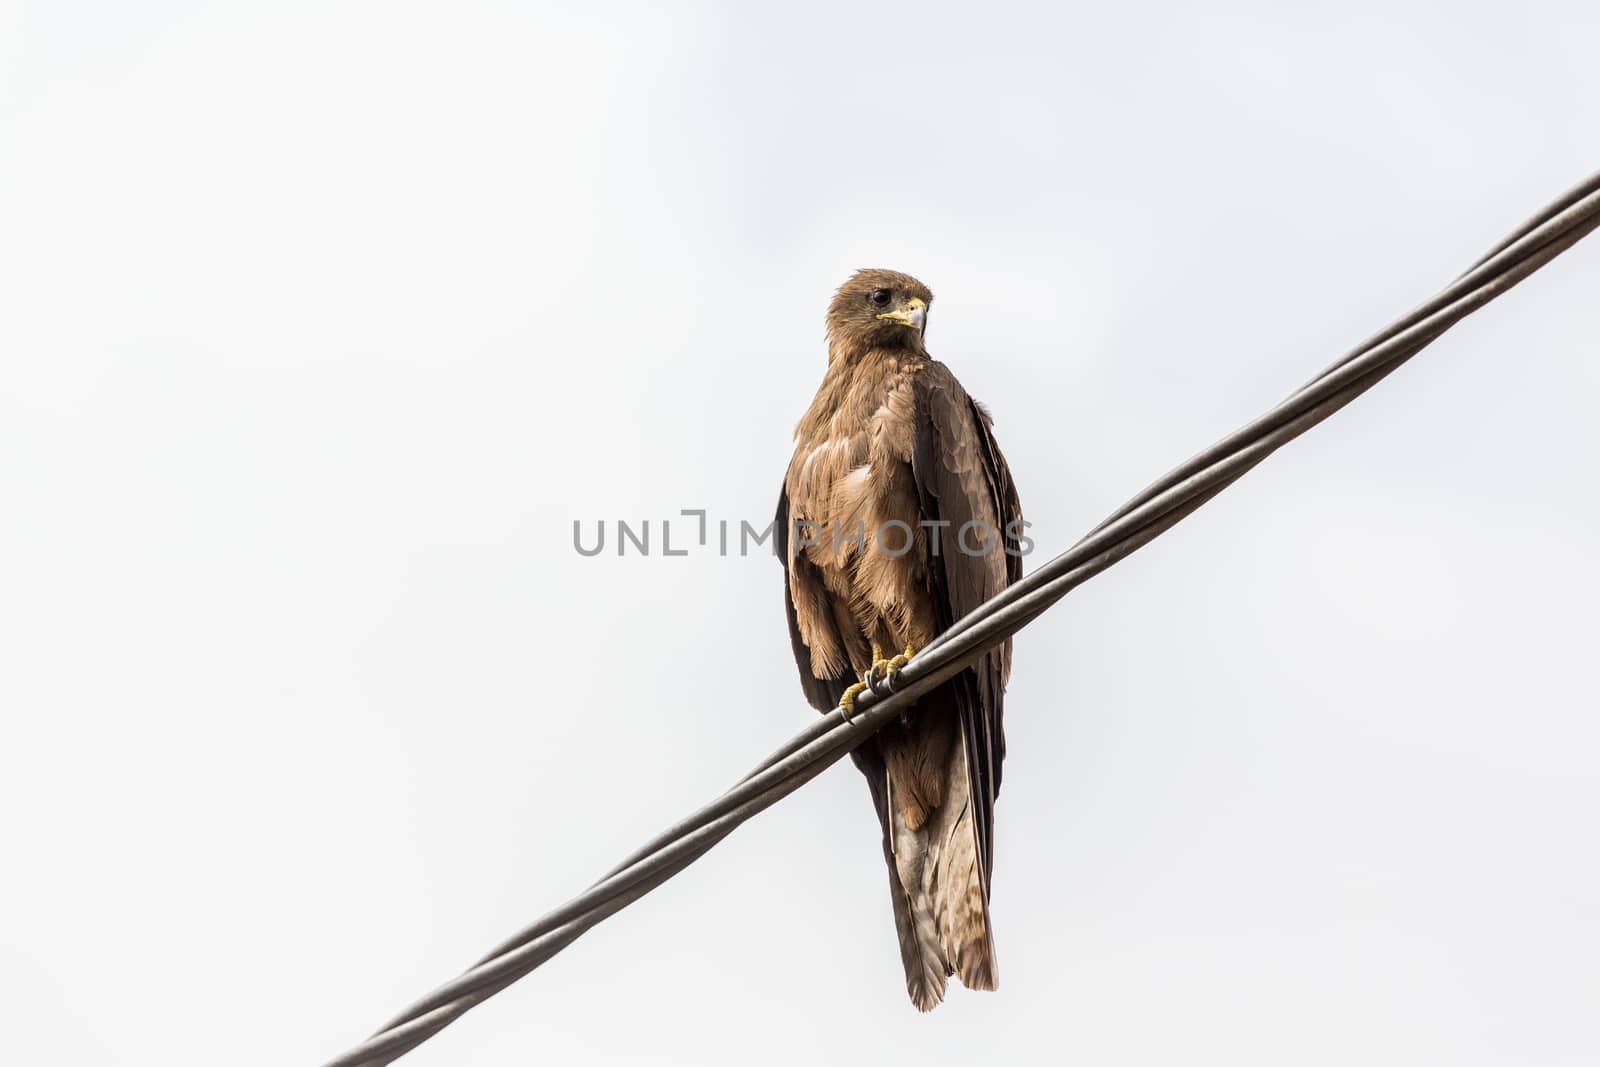 Black Kite, a medium sized bird of pray locally known as Amora in Ethiopia,